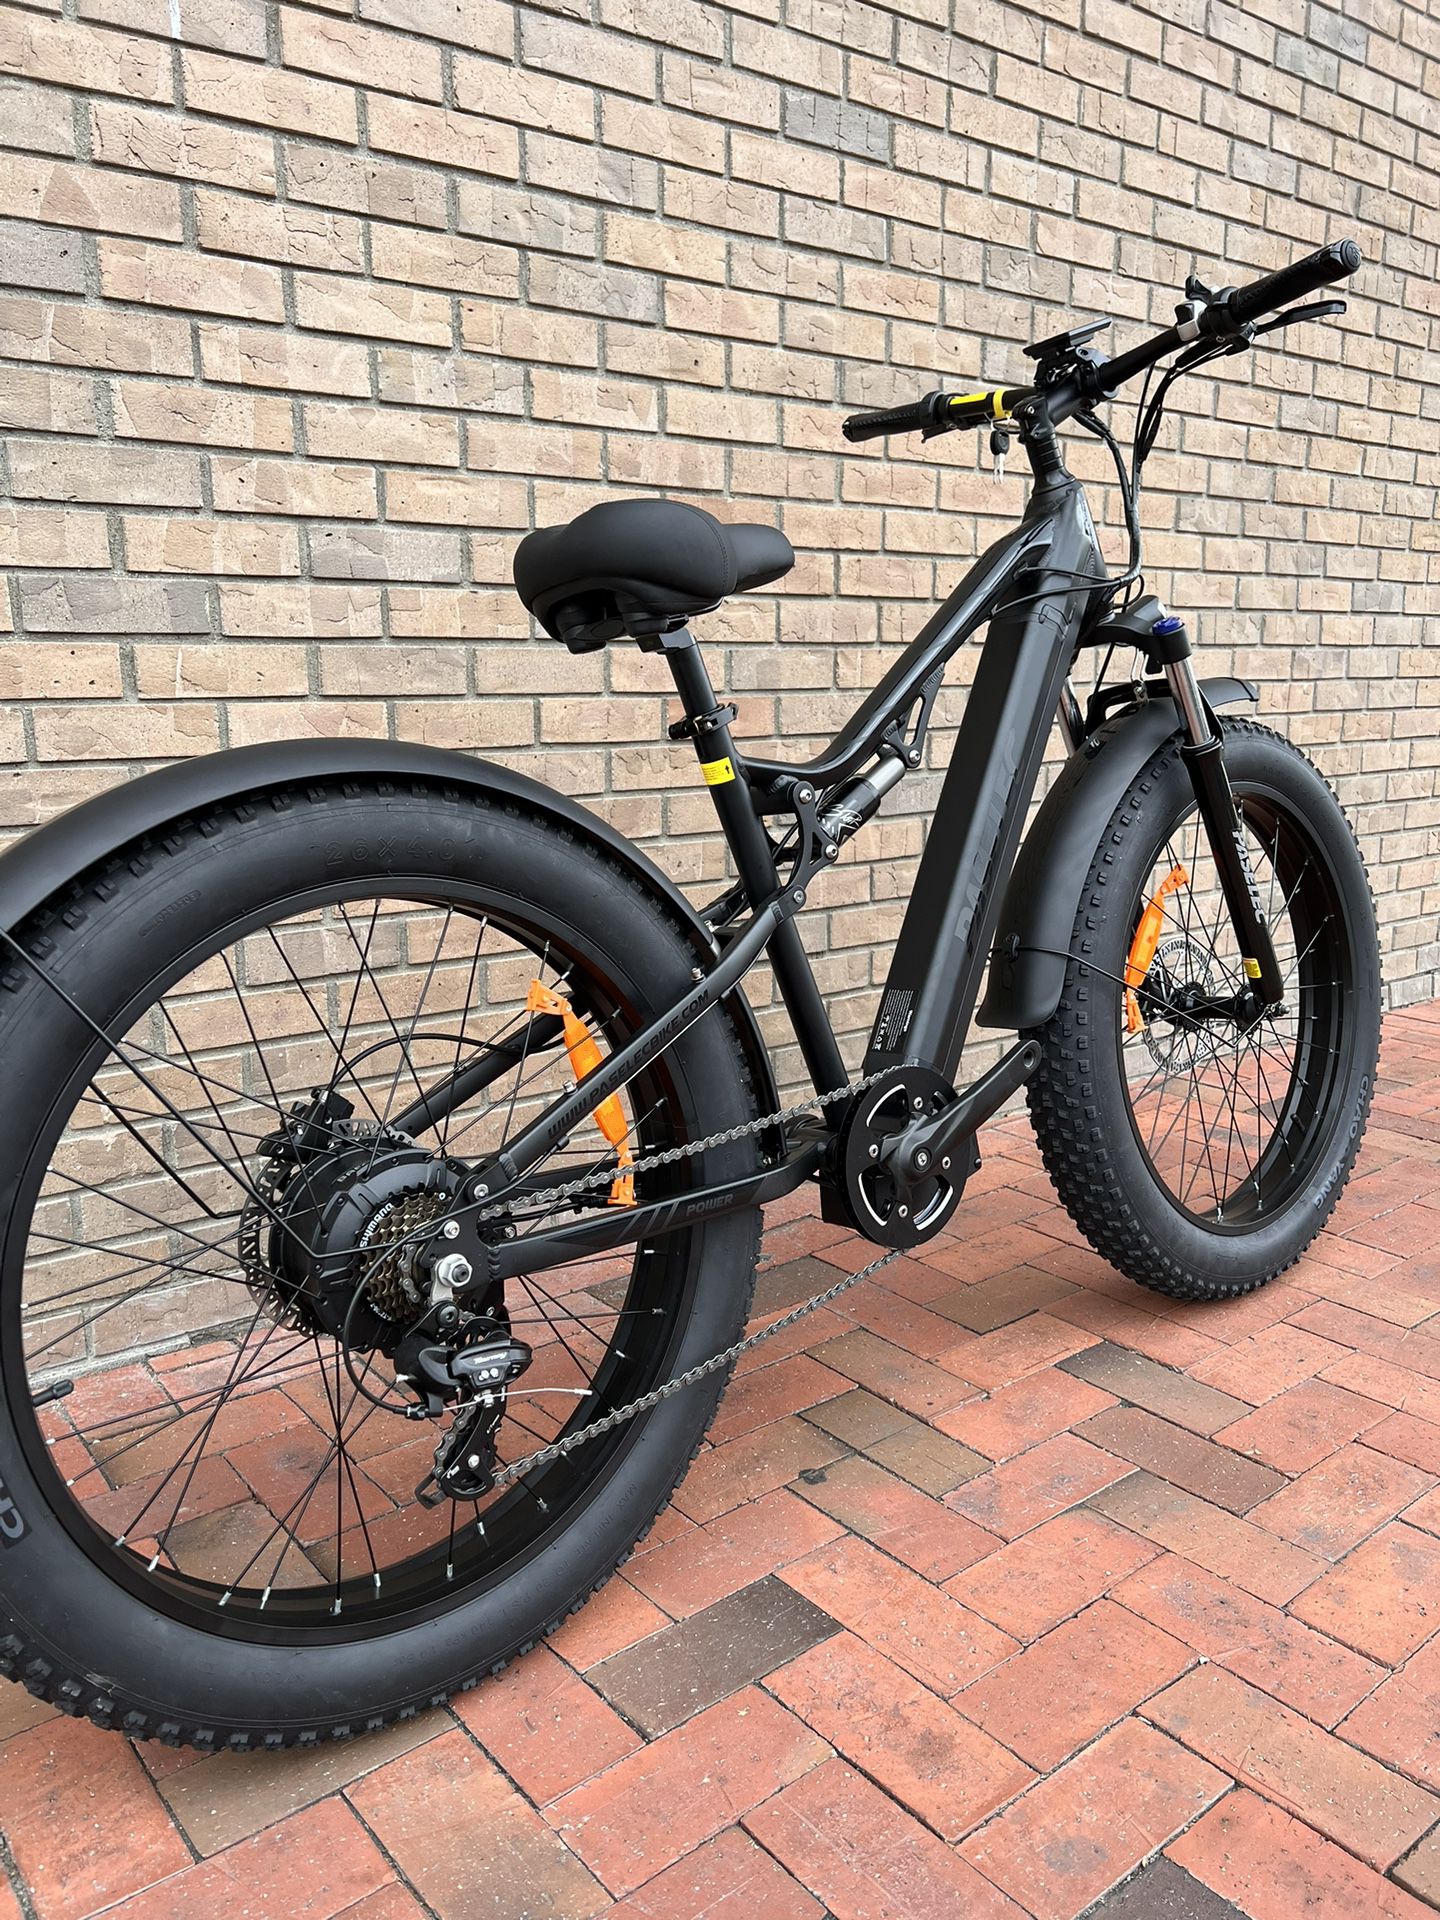 900/750 Watt Electric Fat Tire Mountain Bike (26x4.0), 30mph, 40 Mile Distance-Red Or Black